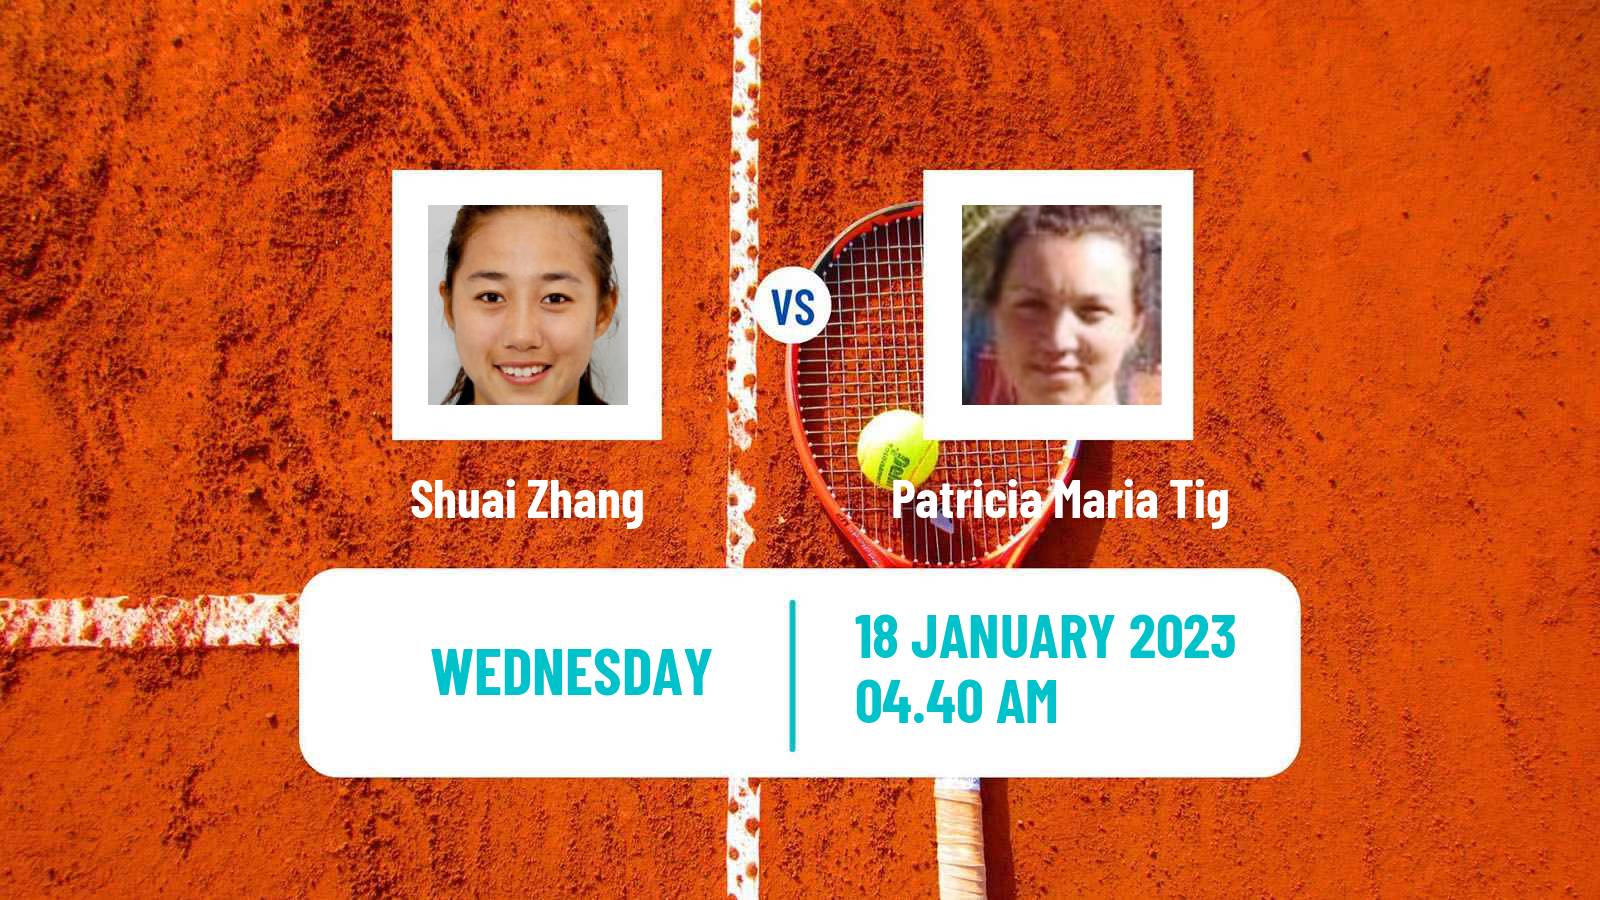 Tennis WTA Australian Open Shuai Zhang - Patricia Maria Tig